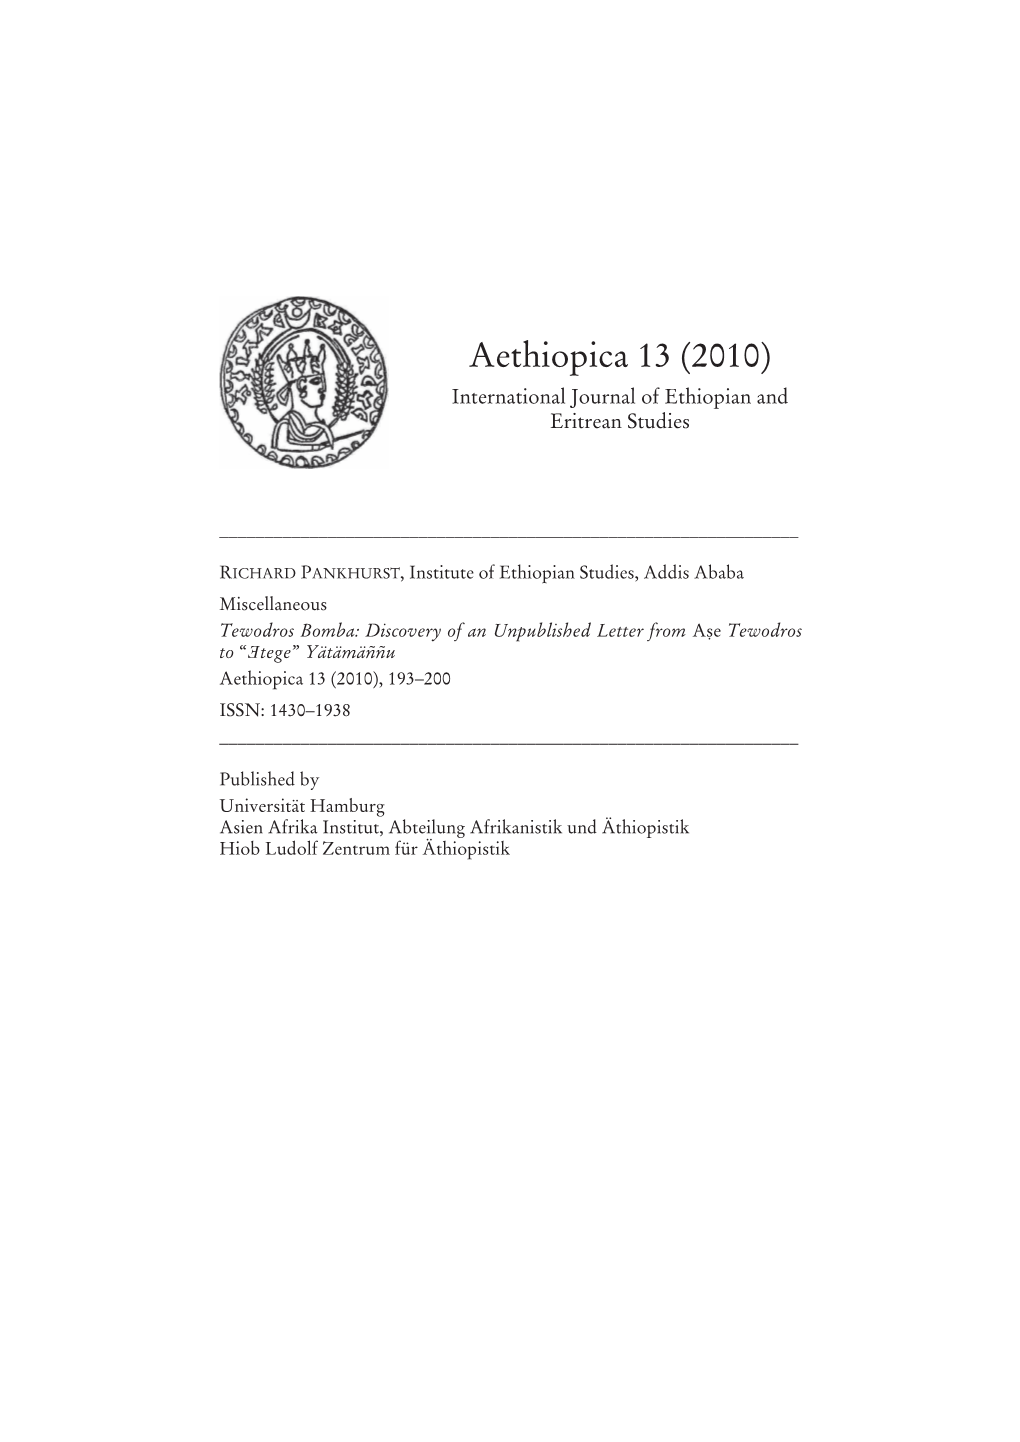 Aethiopica 13 (2010) International Journal of Ethiopian and Eritrean Studies